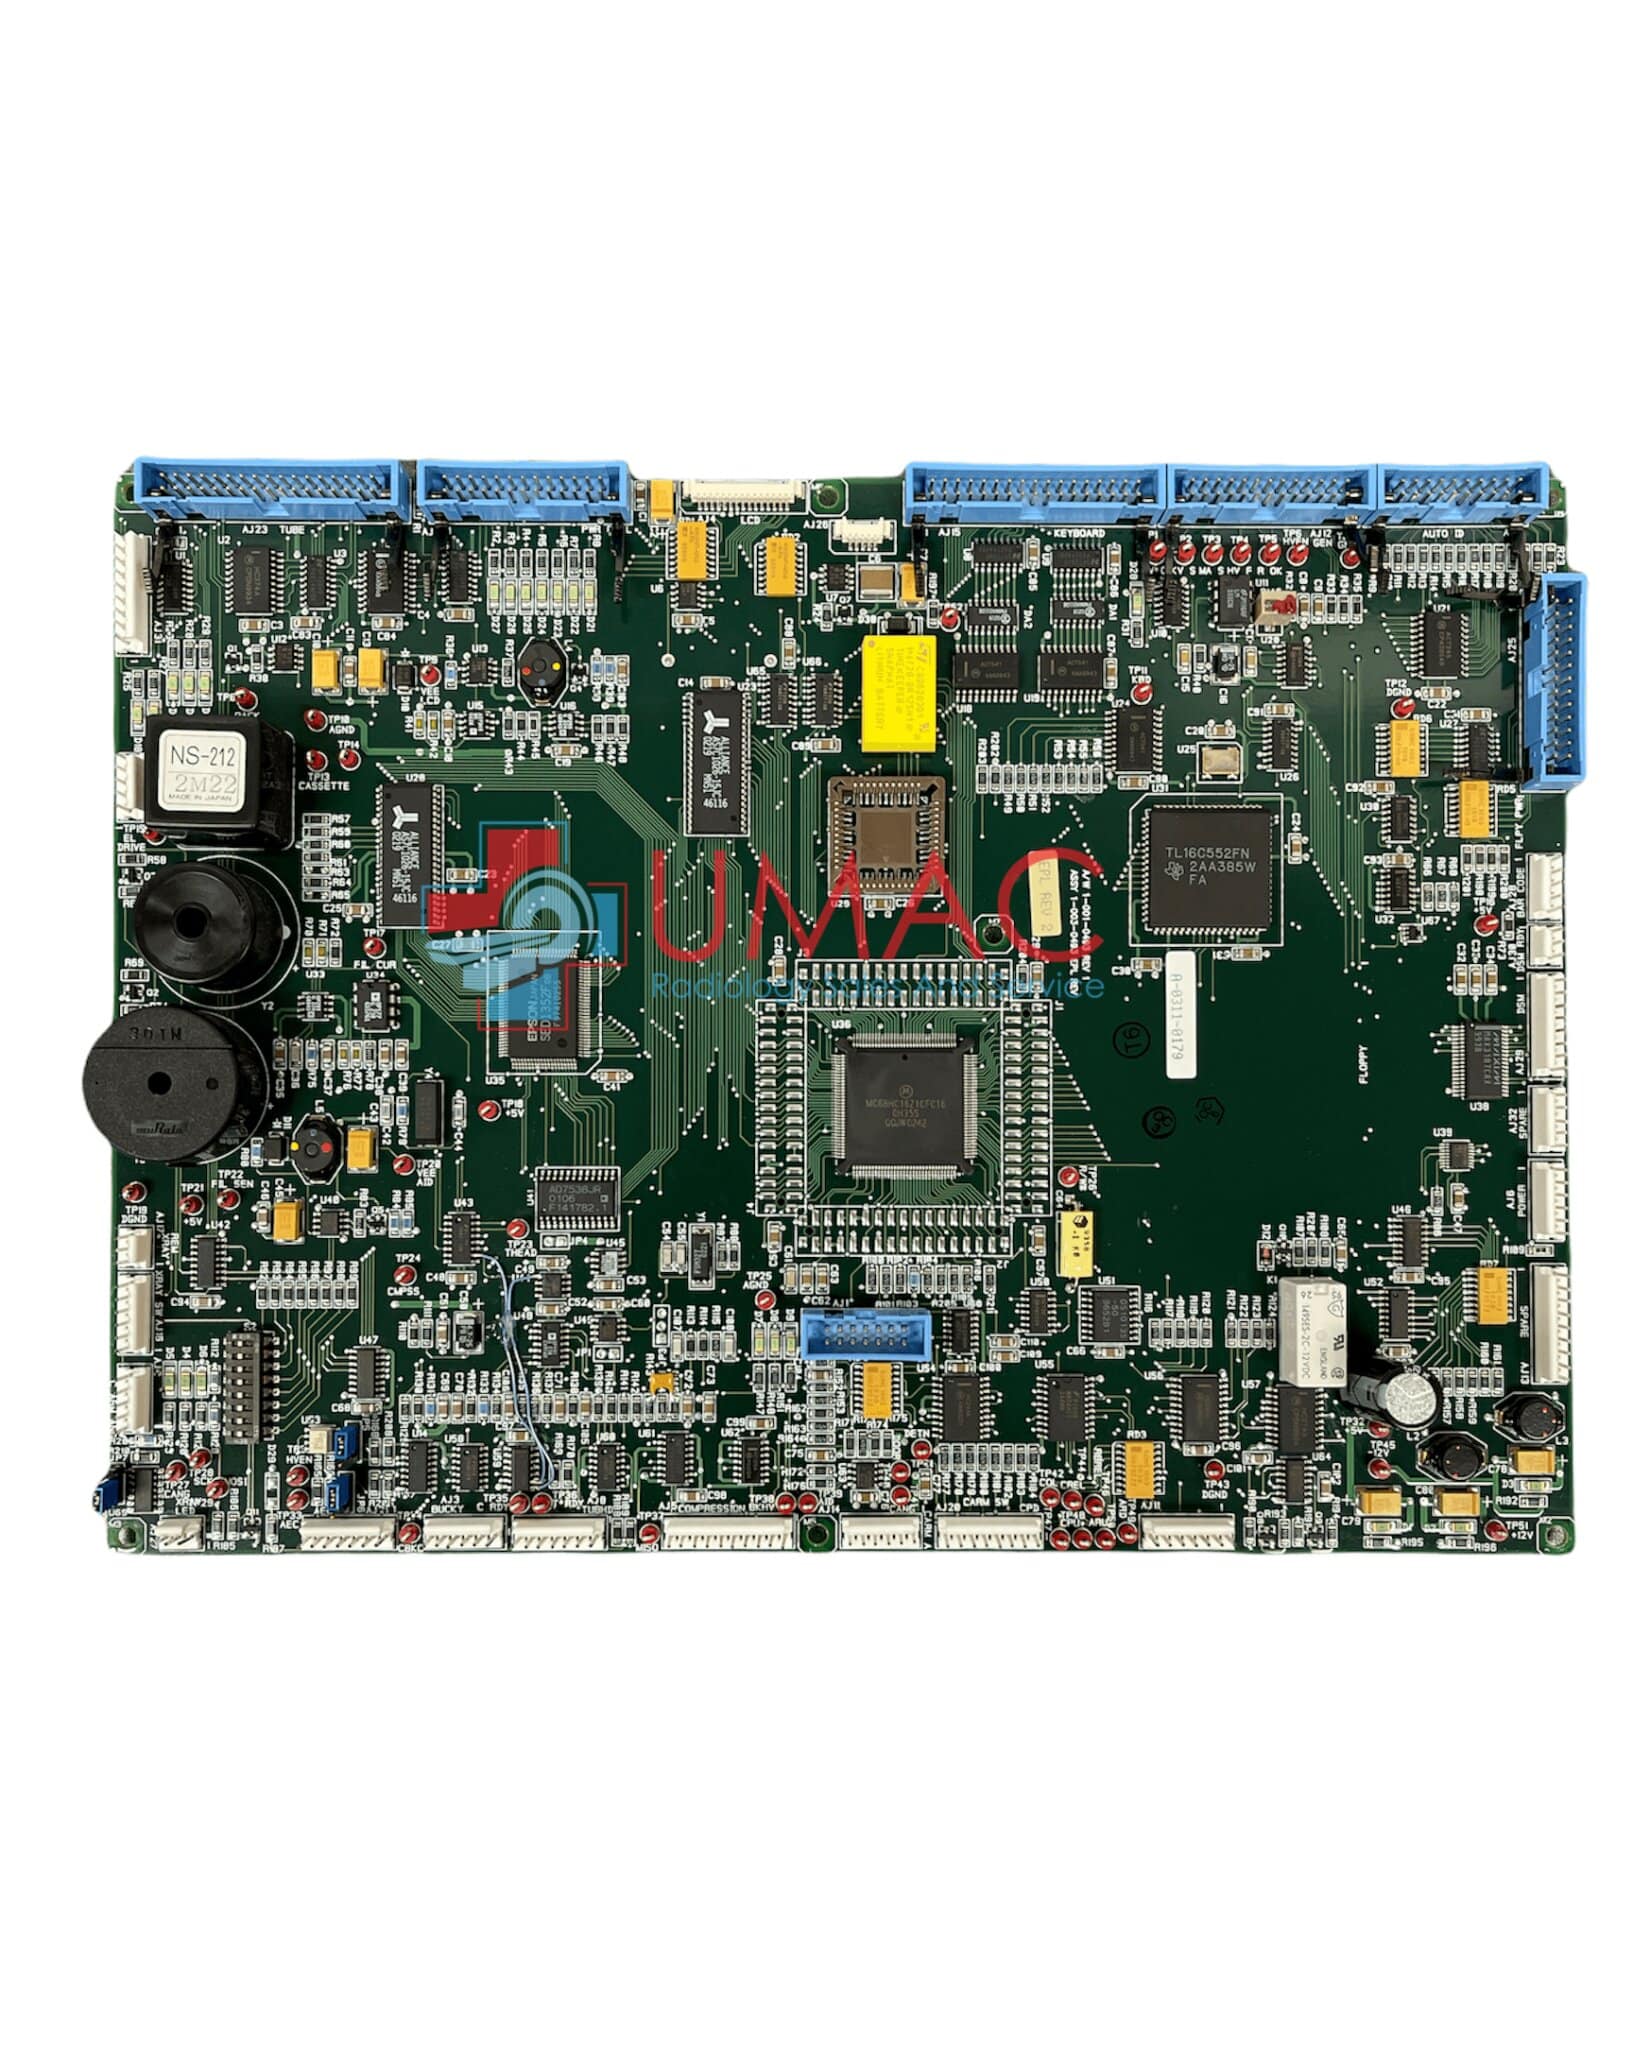 Hologic Lorad M-IV Mammography 1-003-0493 Host Micro Processor Board Assembly